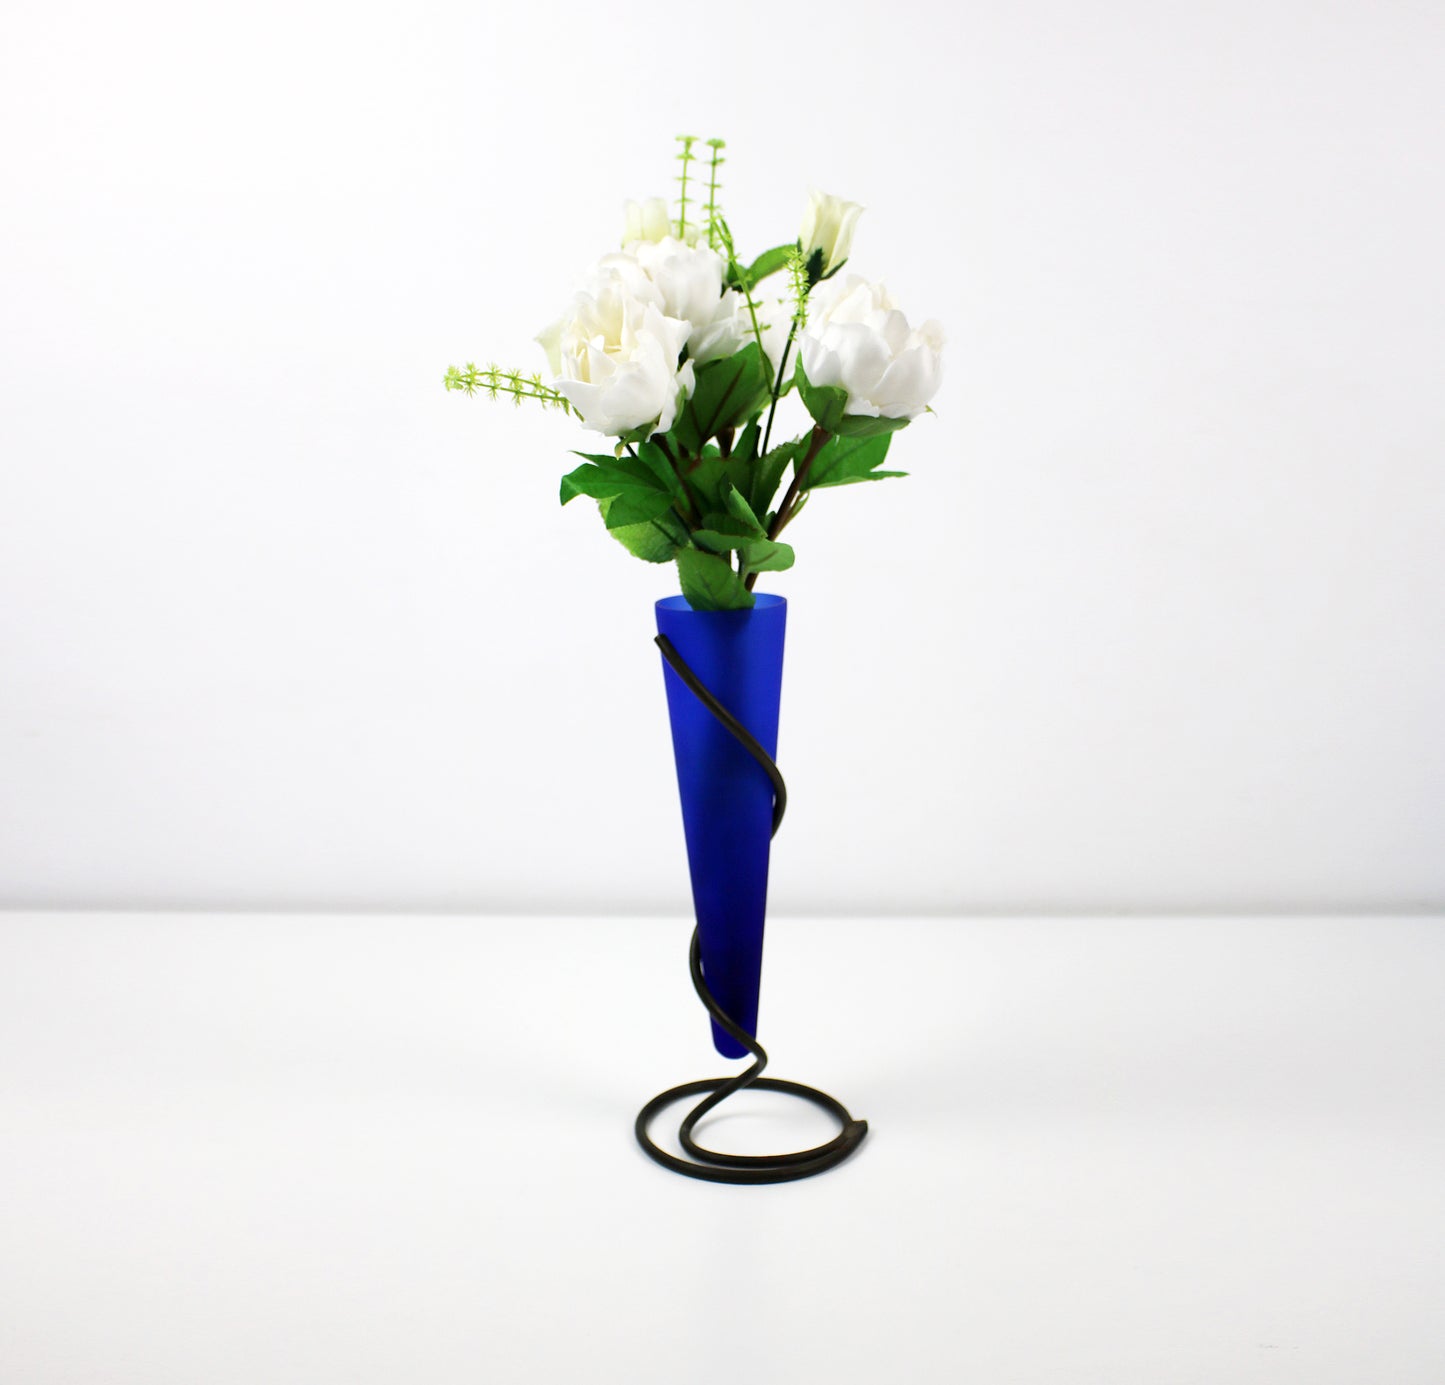 Deep blue glass cone vase in metal spiral holder - 24cm